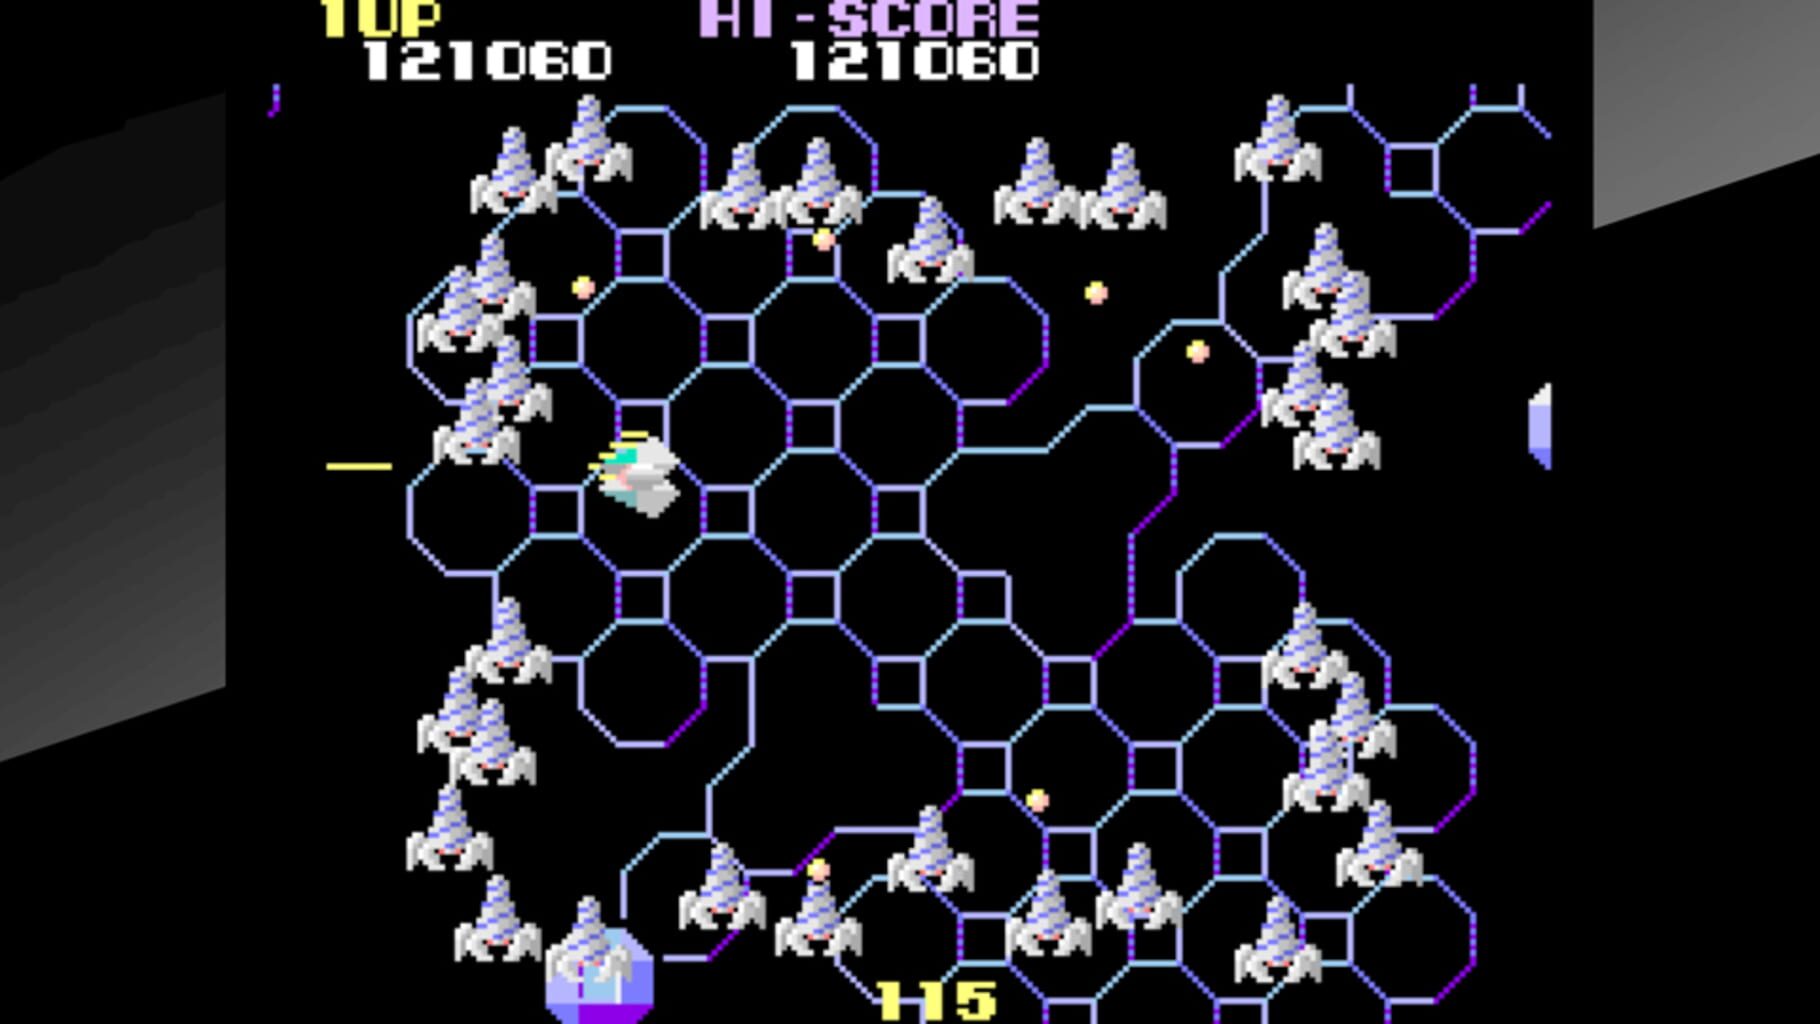 Arcade Archives: Nova 2001 screenshot